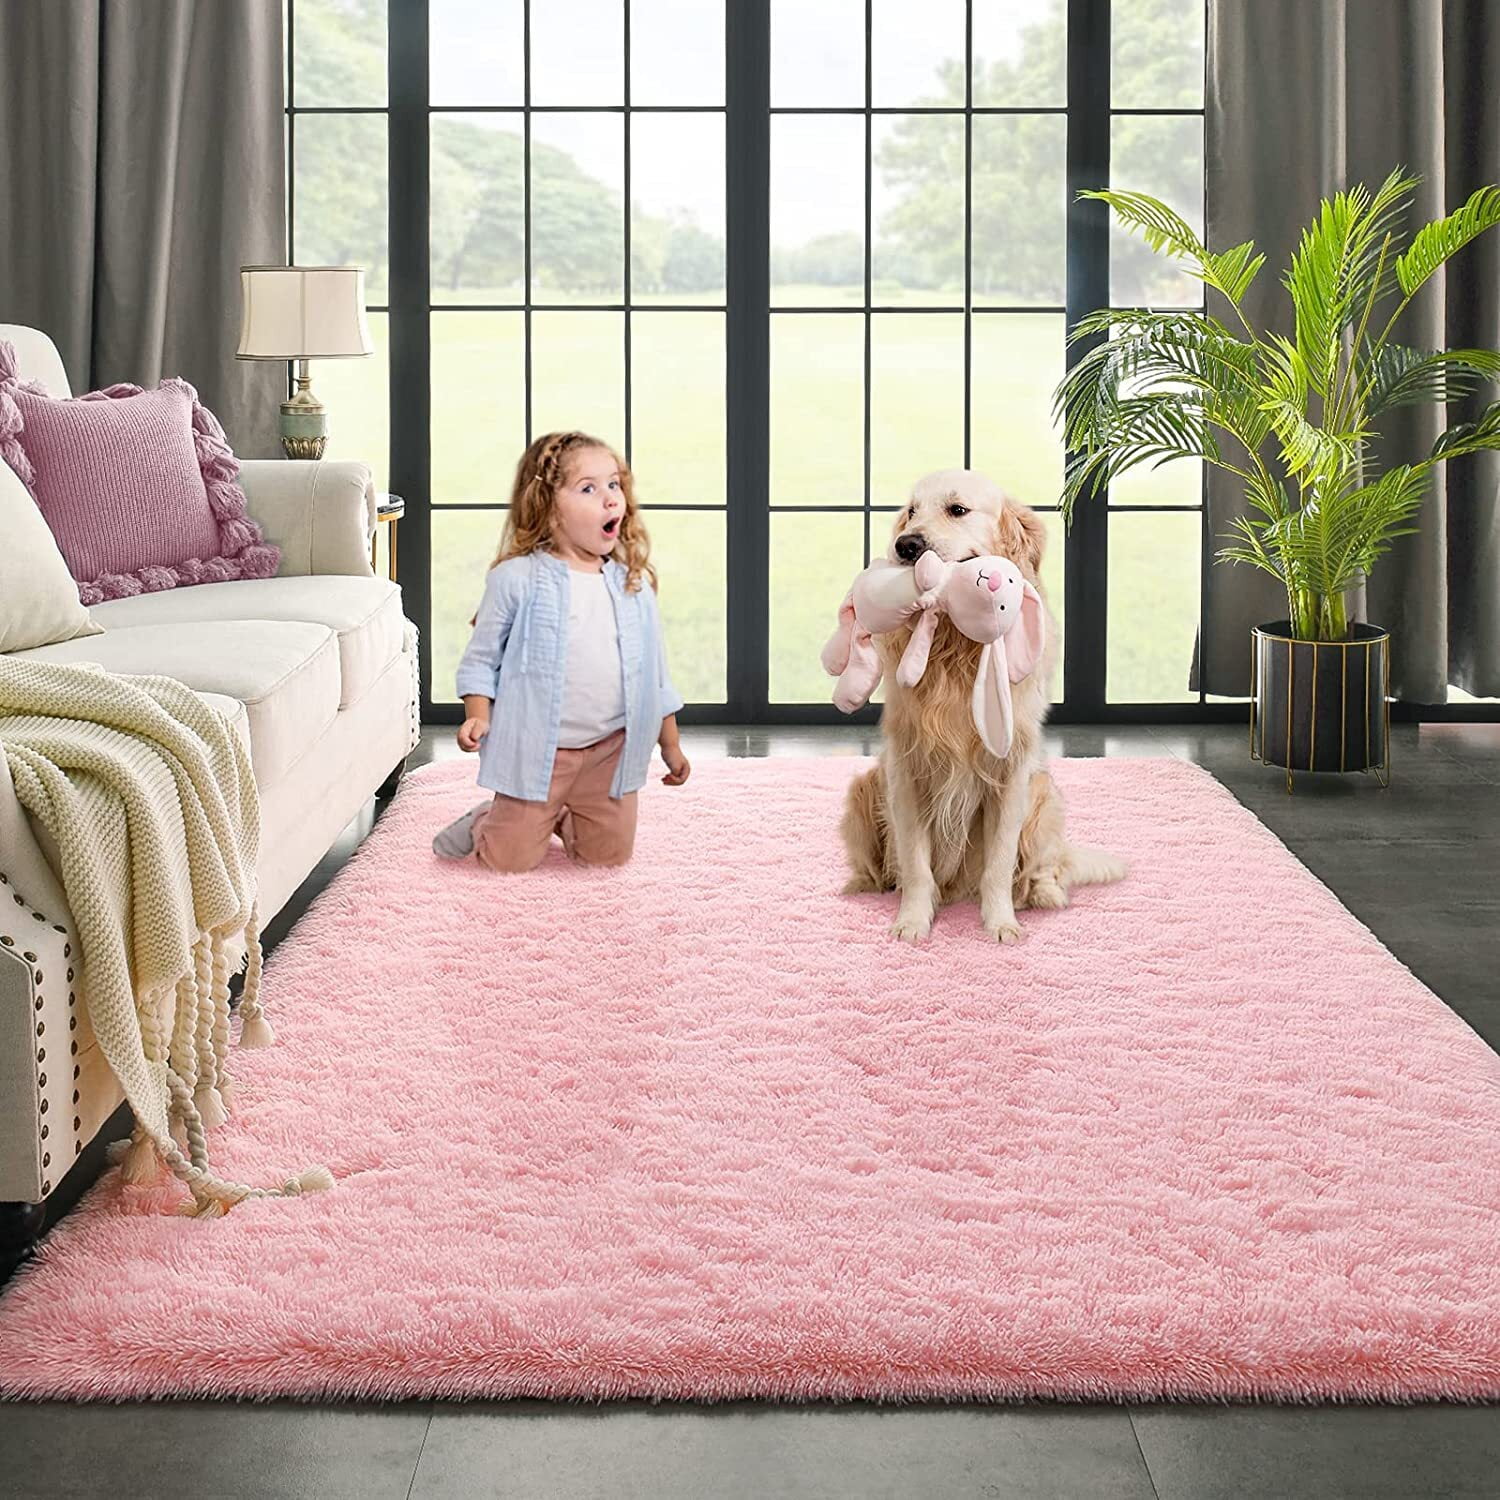 Jelymark Super Soft Shaggy Rug for Bedroom, 4x5.9 Fluffy Carpet for Living Room